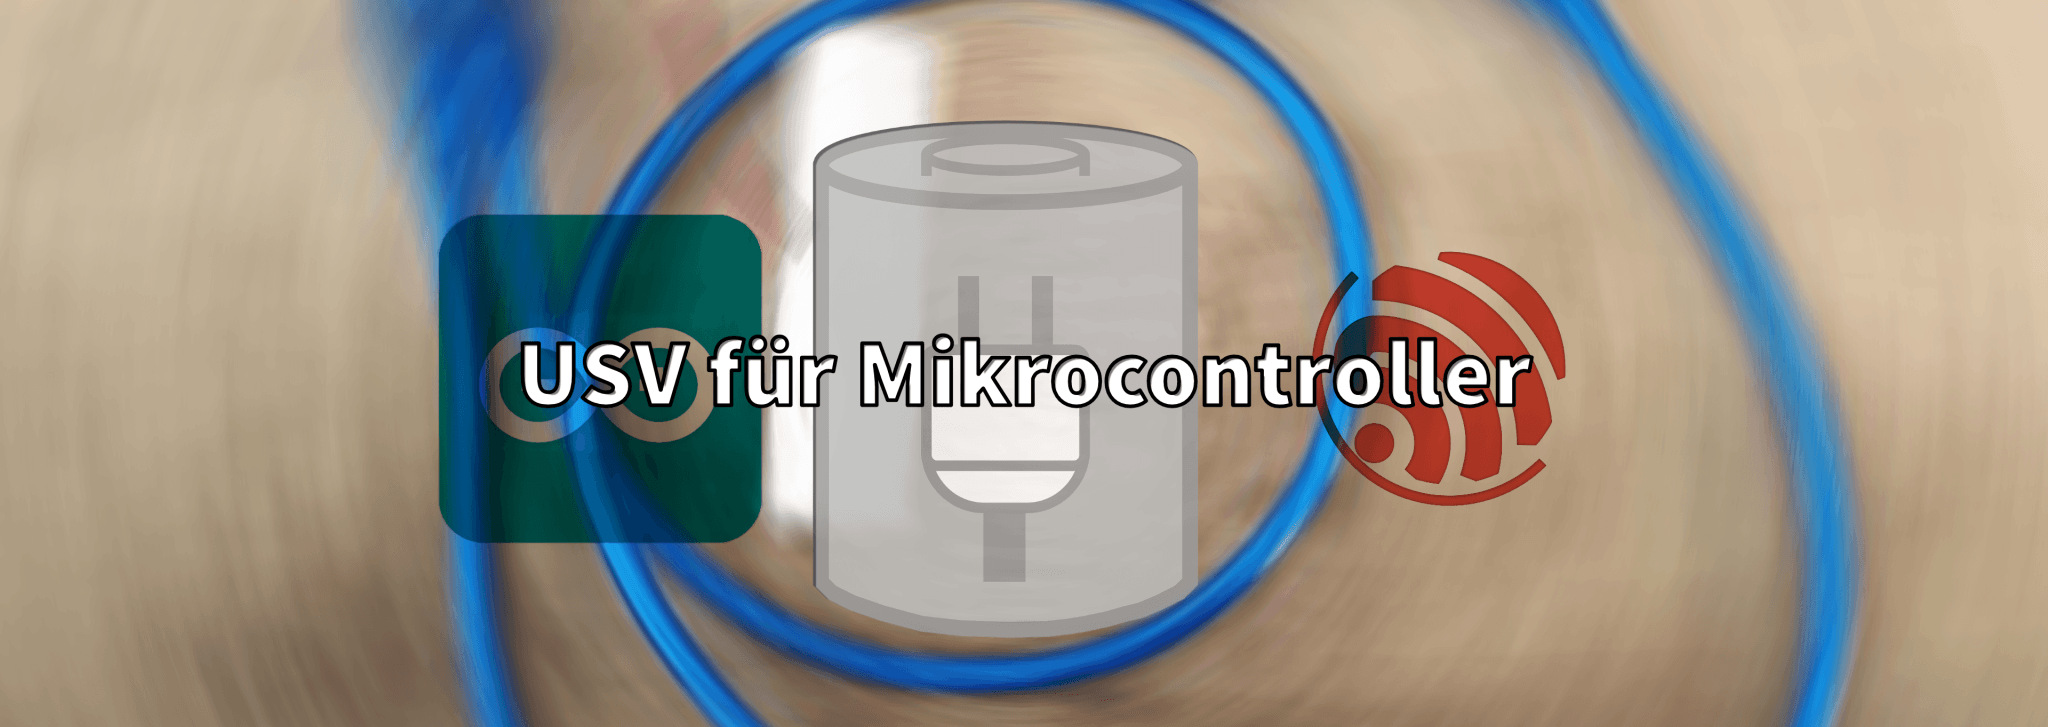 USV für Mikrocontroller - AZ-Delivery